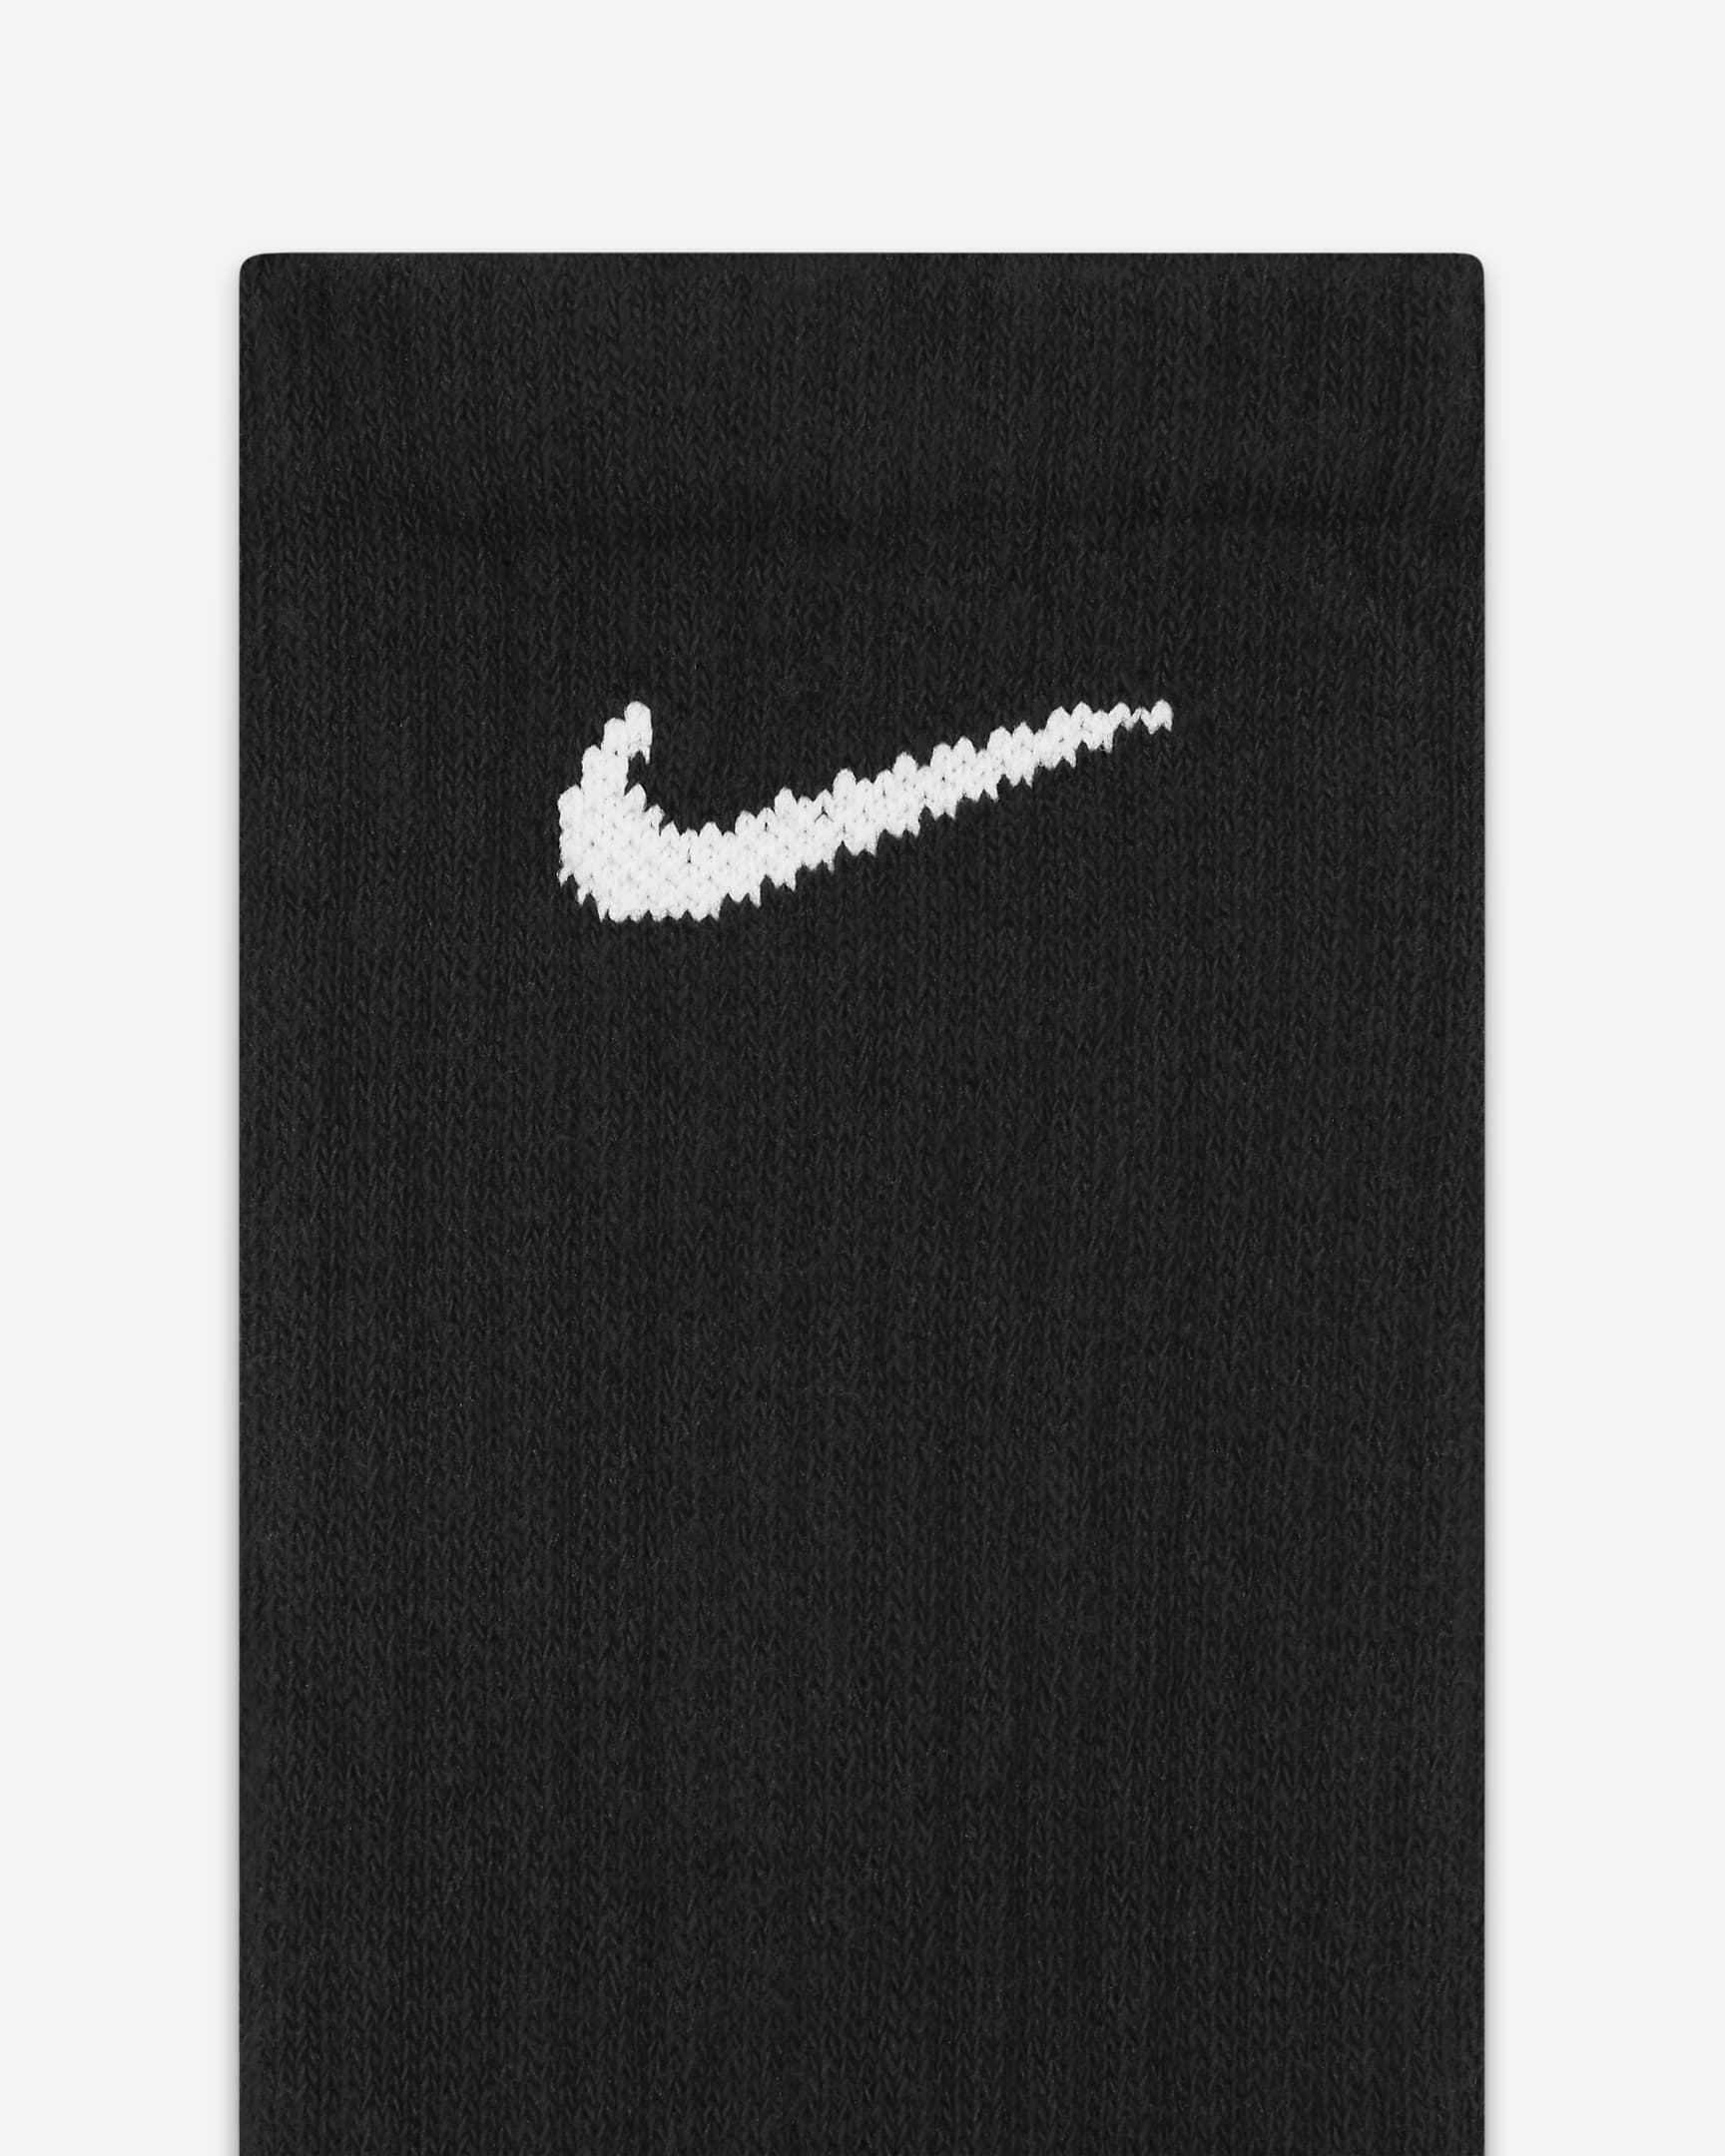 Nike Everyday Cushioned Training Crew Socks (6 Pairs). Nike.com